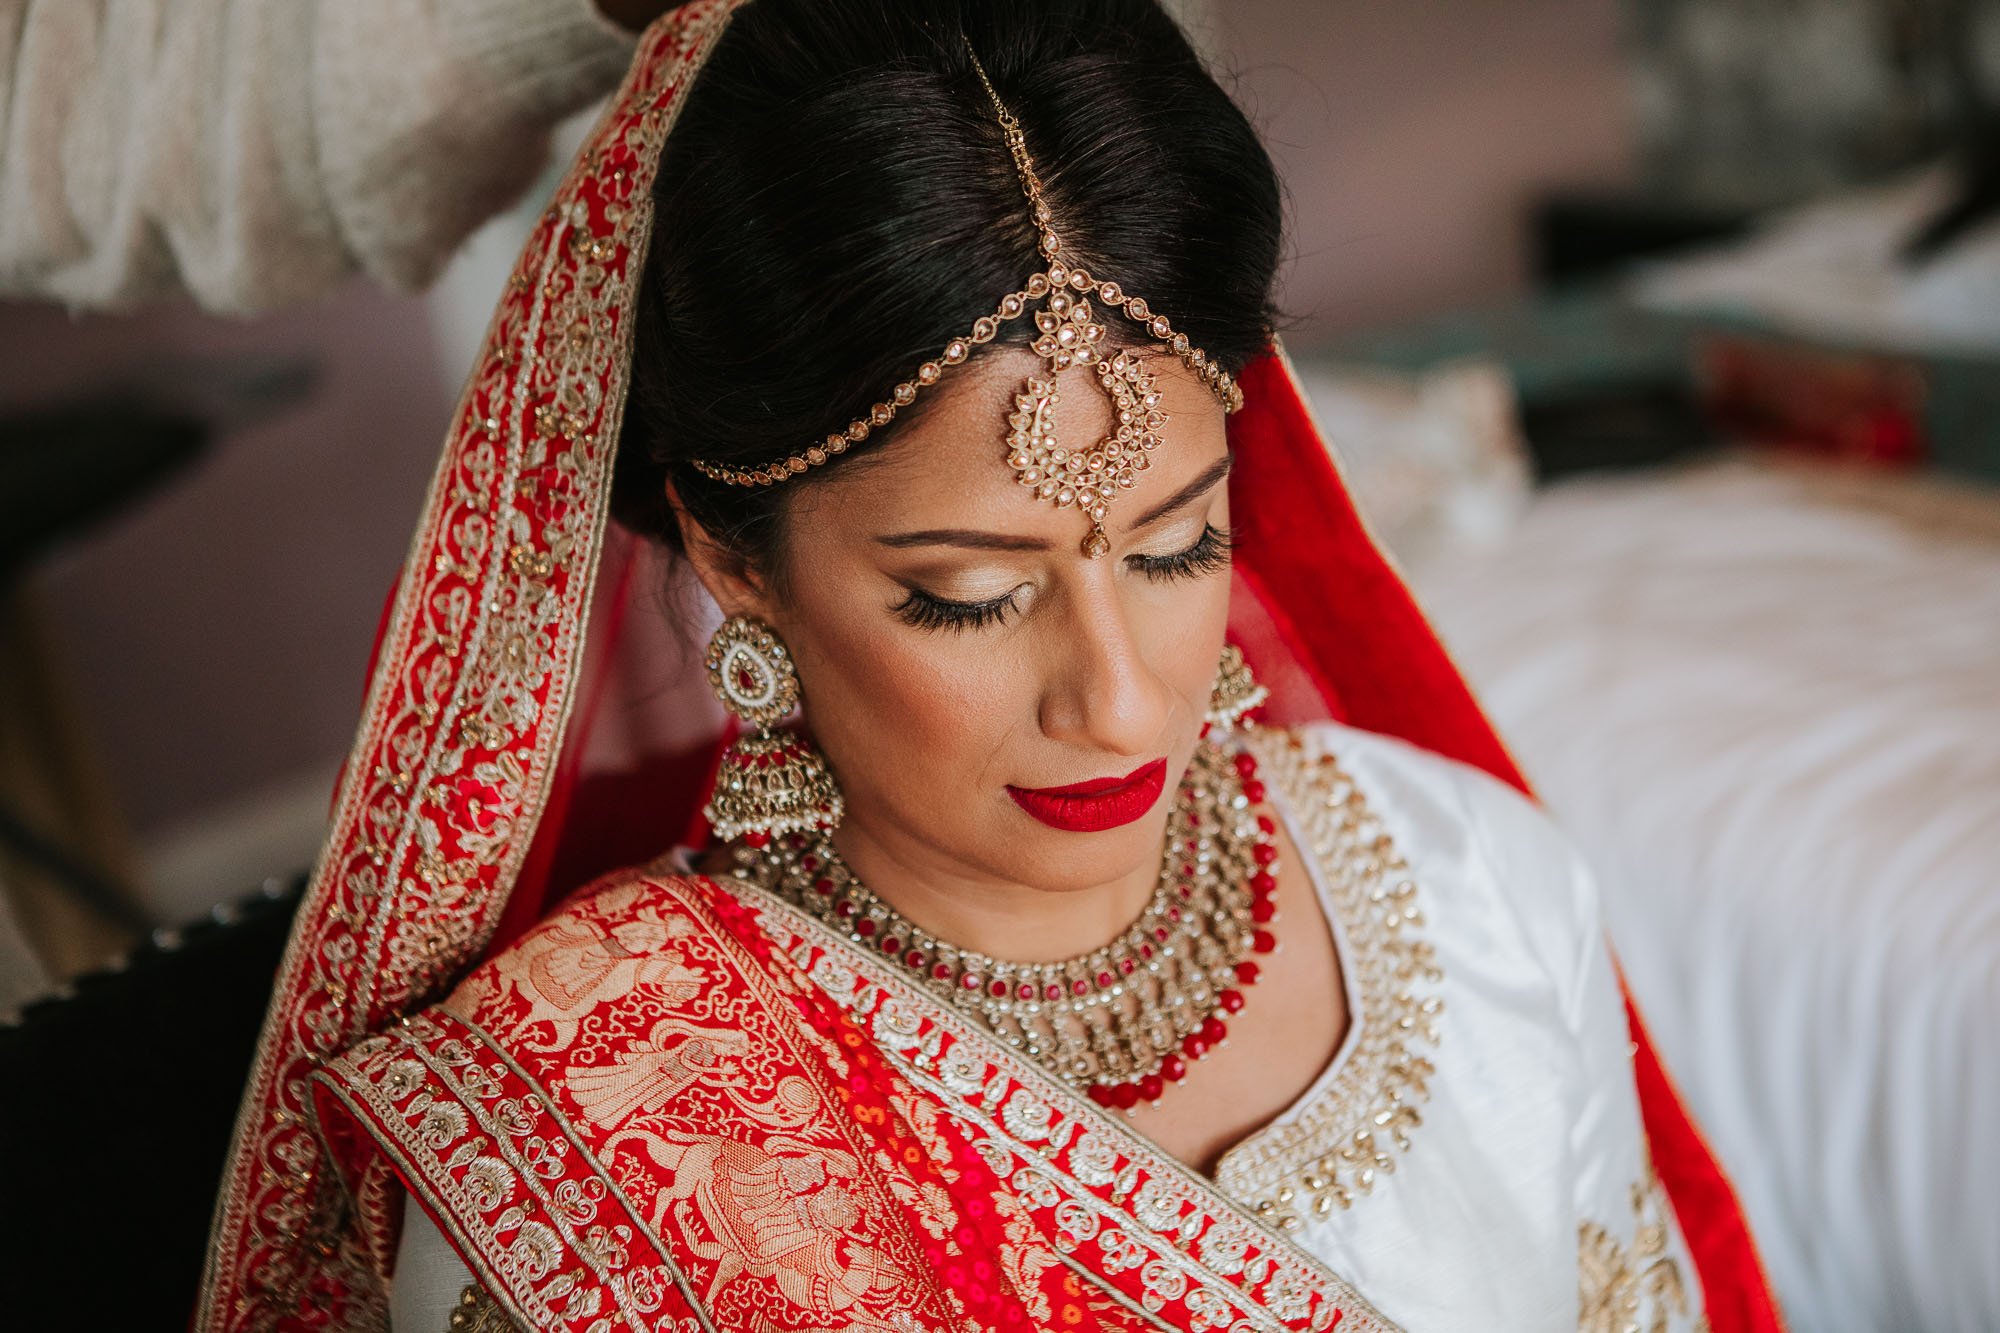 Hindu Bride dressed in traditional red sari.